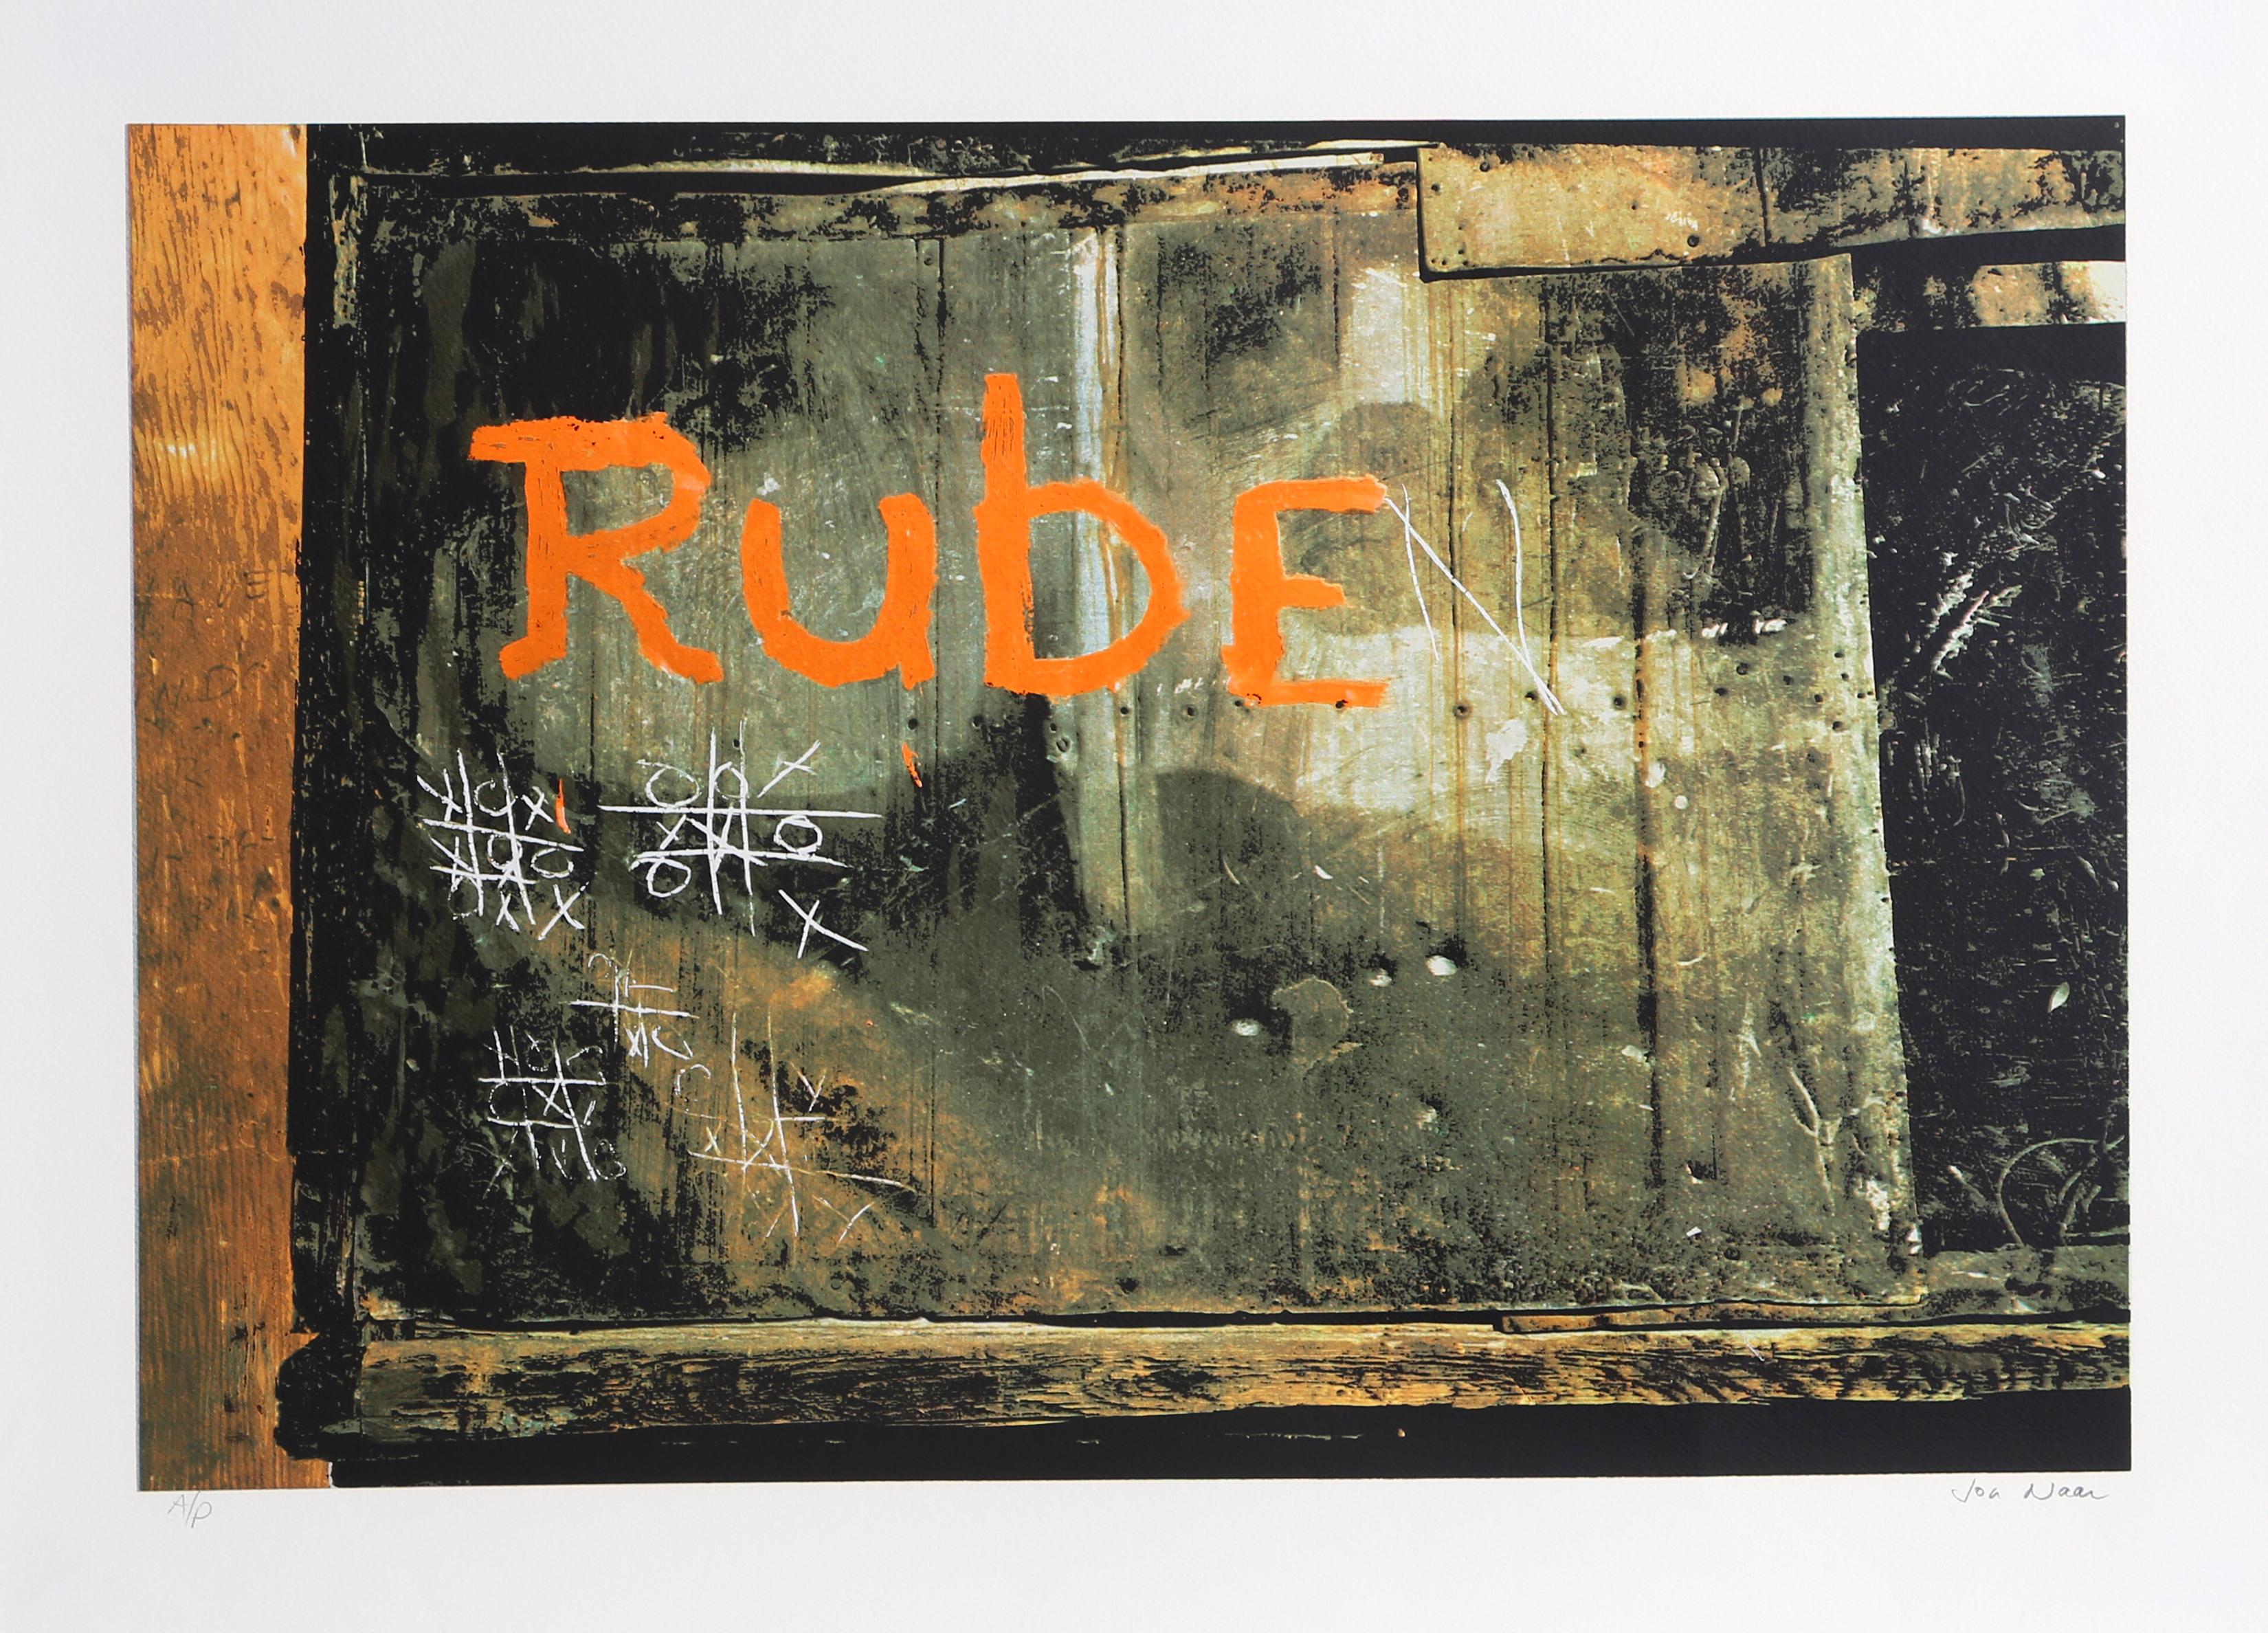 "Rube" from Faith of Graffiti, 1974, Serigraph by Jon Naar